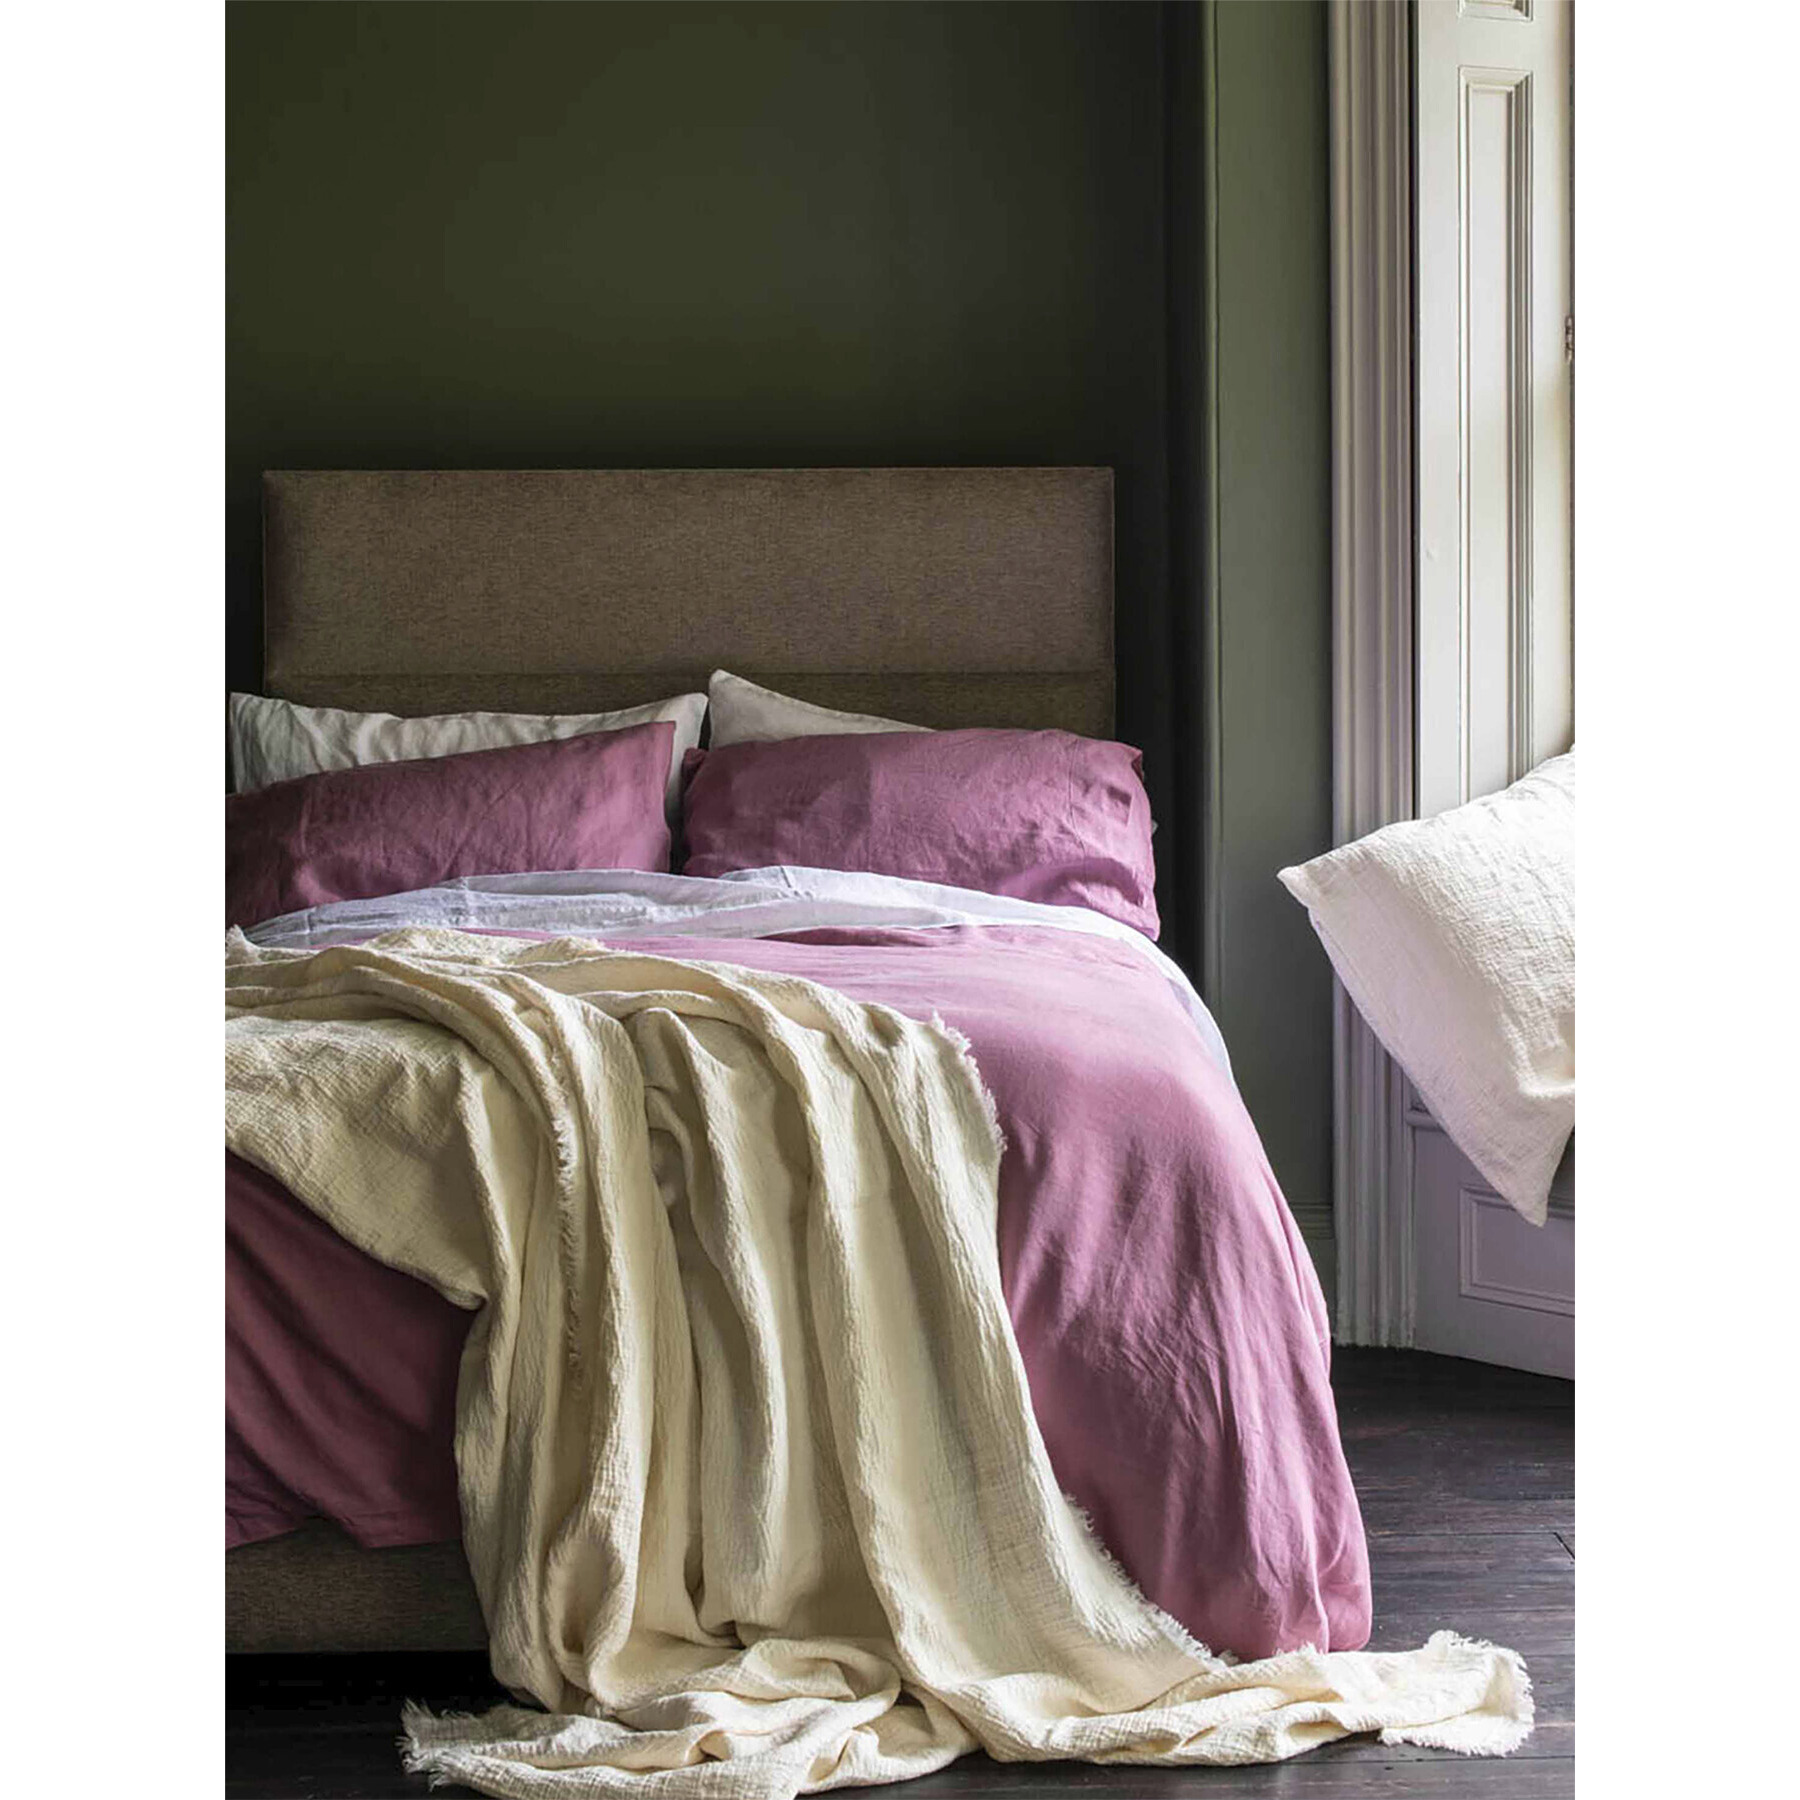 Piglet in Bed Linen Flat Sheet - Size Single Pink - image 1